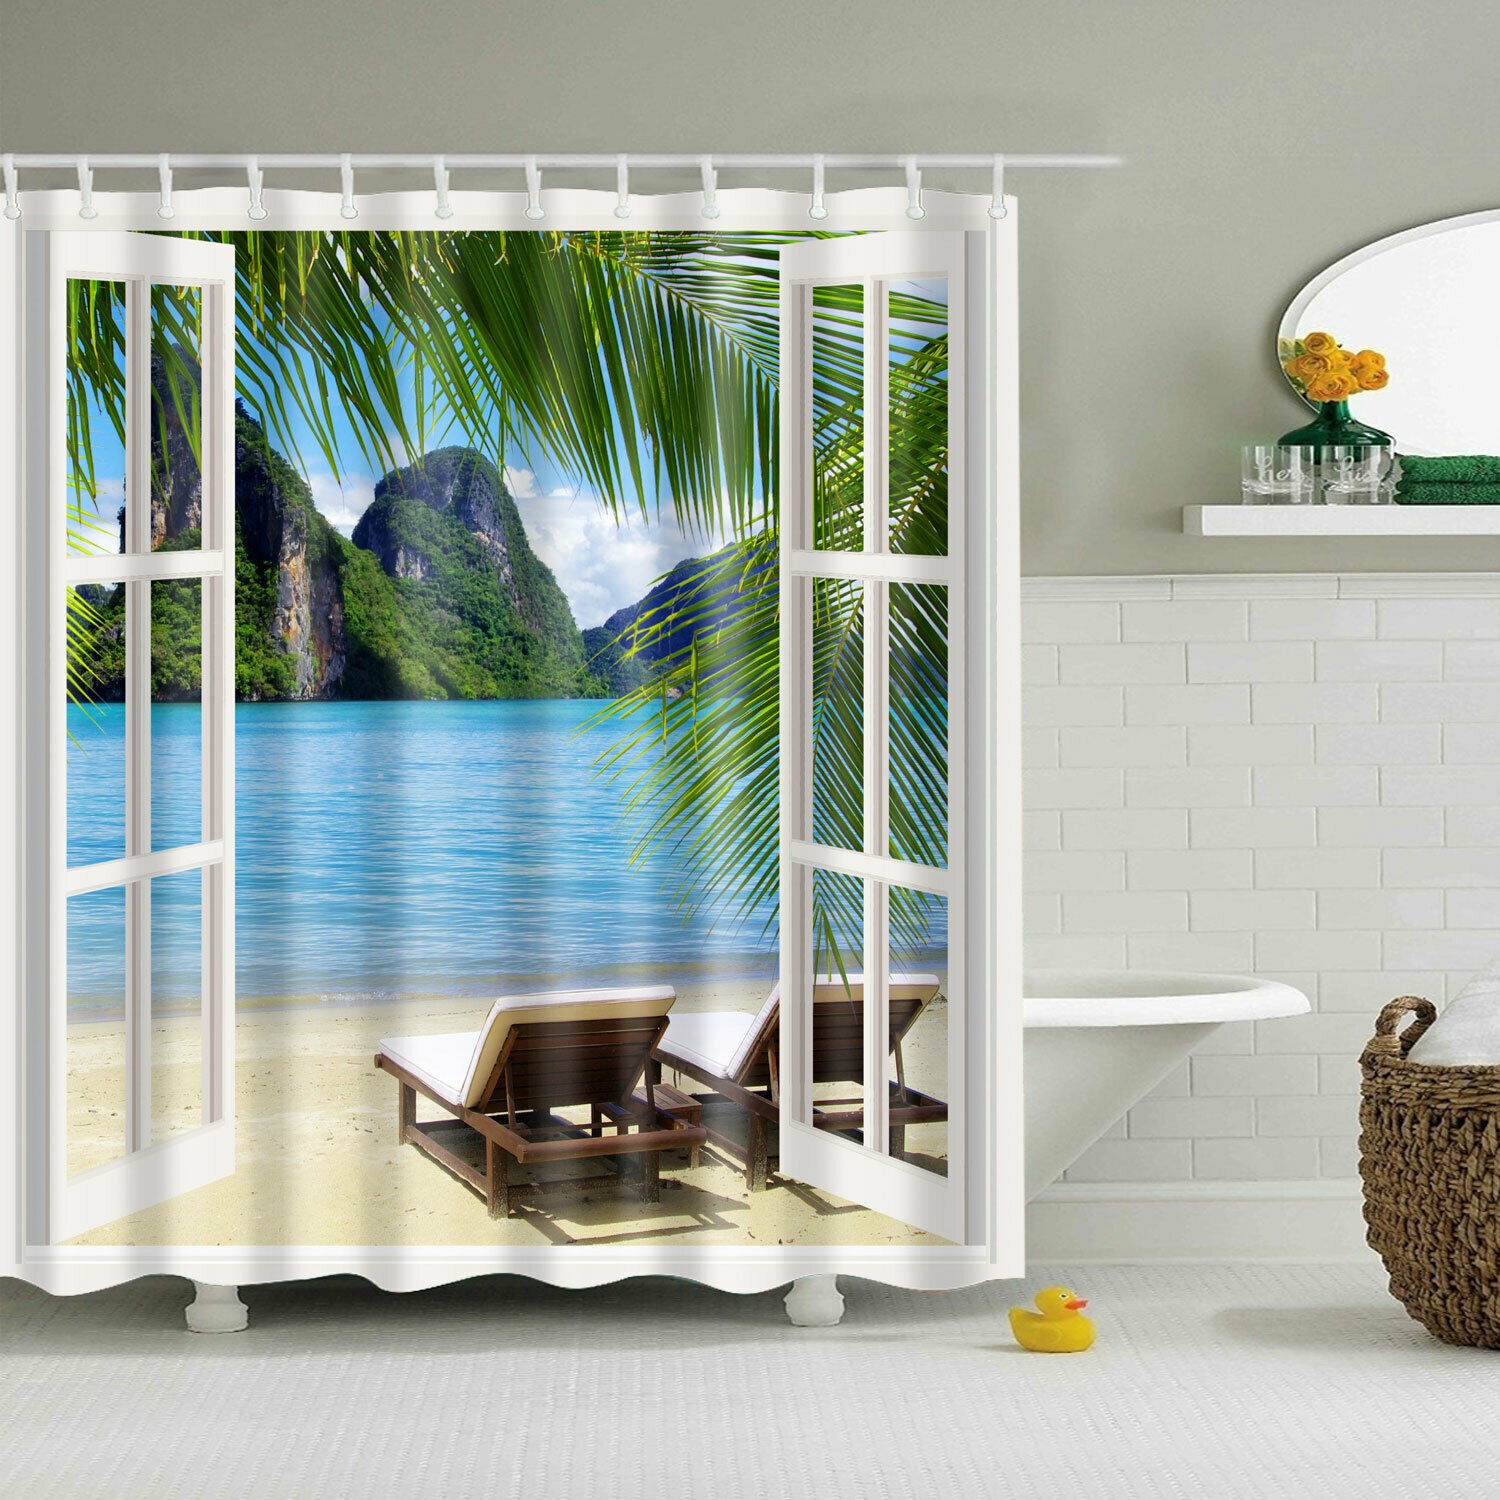 Tropical scenery shower curtain 3d window beach themed